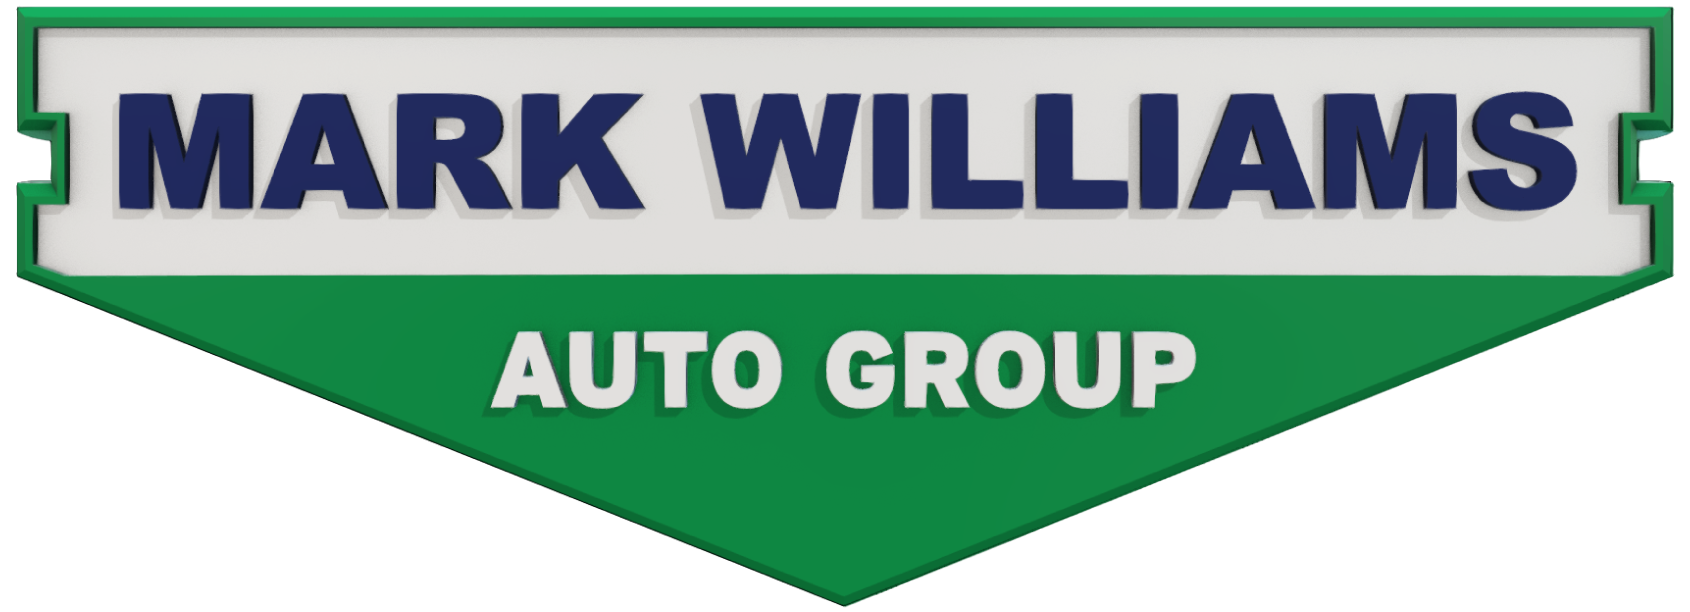 Mark Williams Auto Group